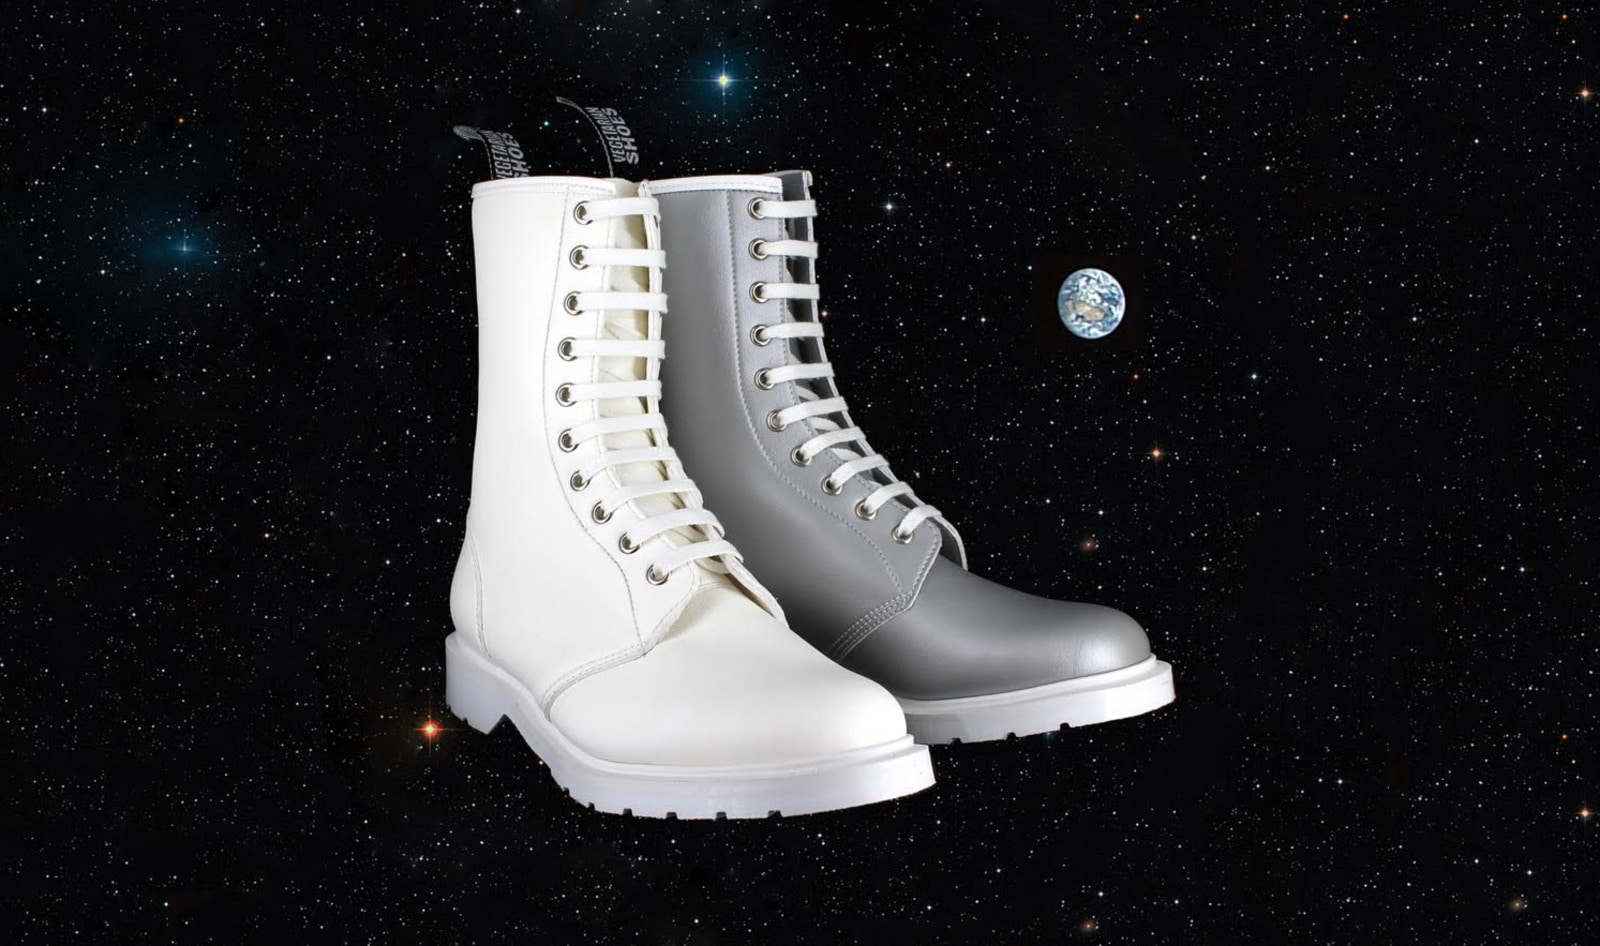 Vegan Astronaut Boots Launch to Celebrate 50th Anniversary of Moon Landing&nbsp;